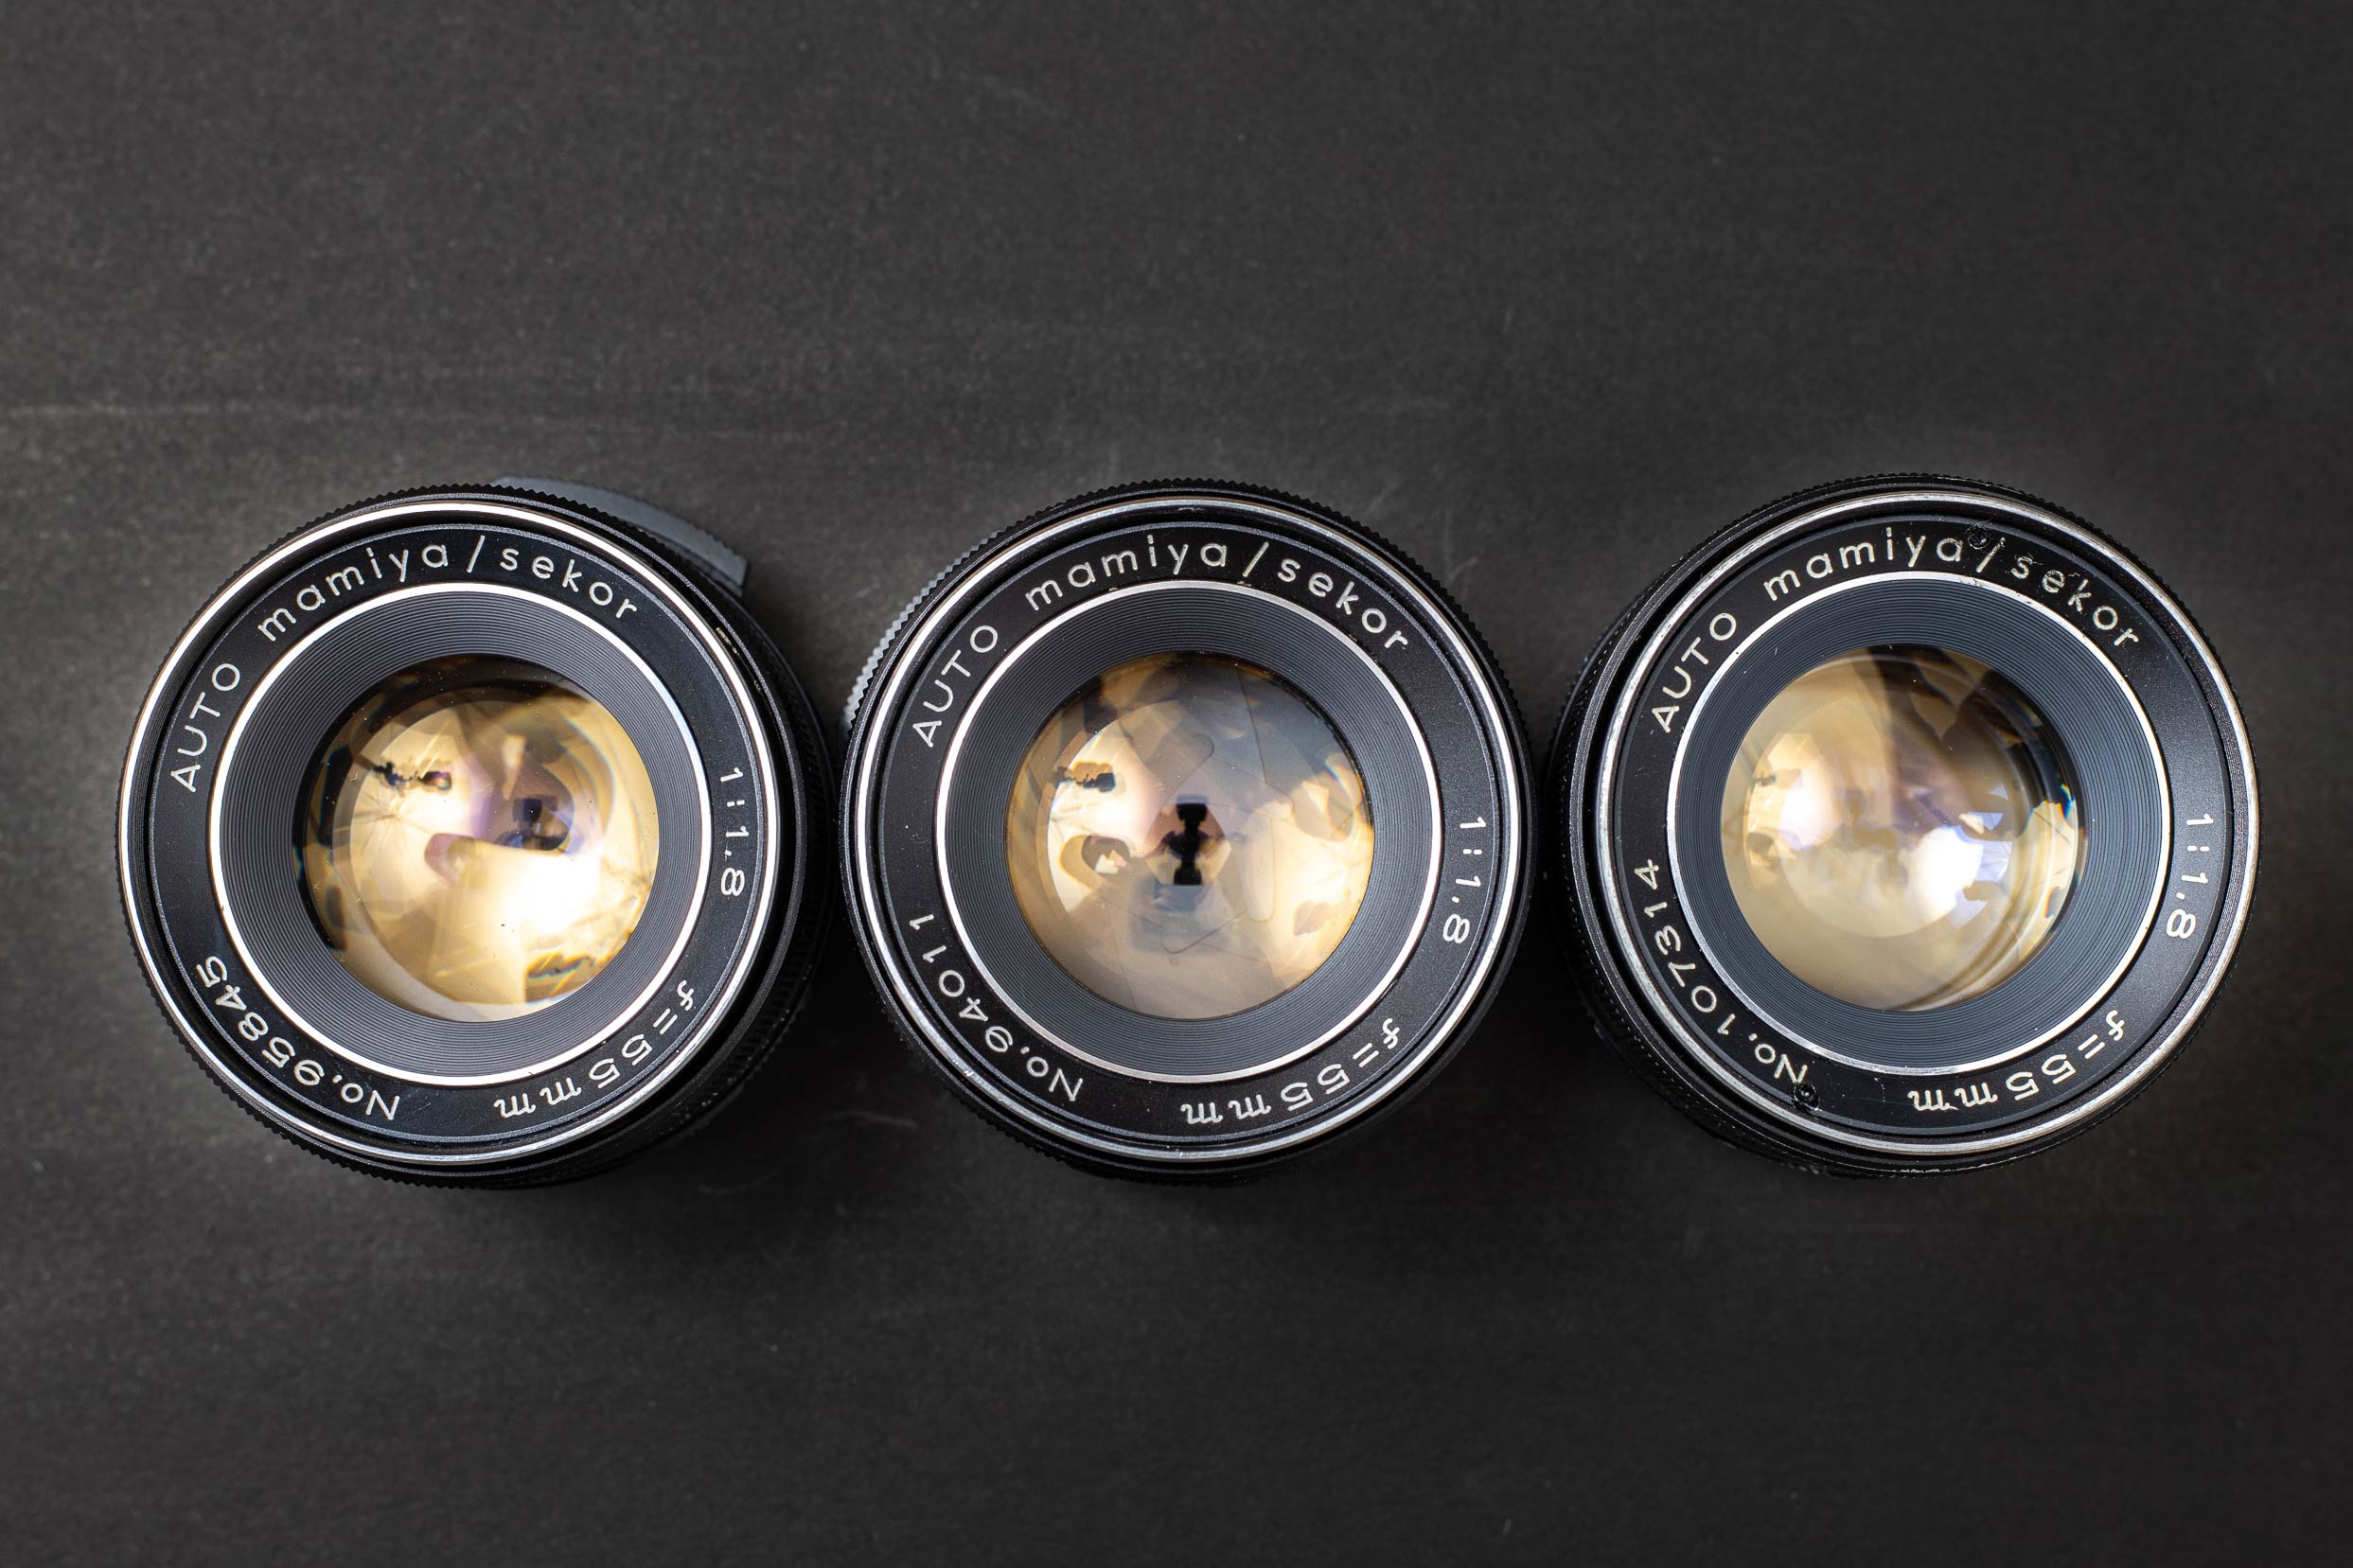 Mamiya Sekor 55mm f1.8 M42 Lens Review on EOS R - Lens Legend